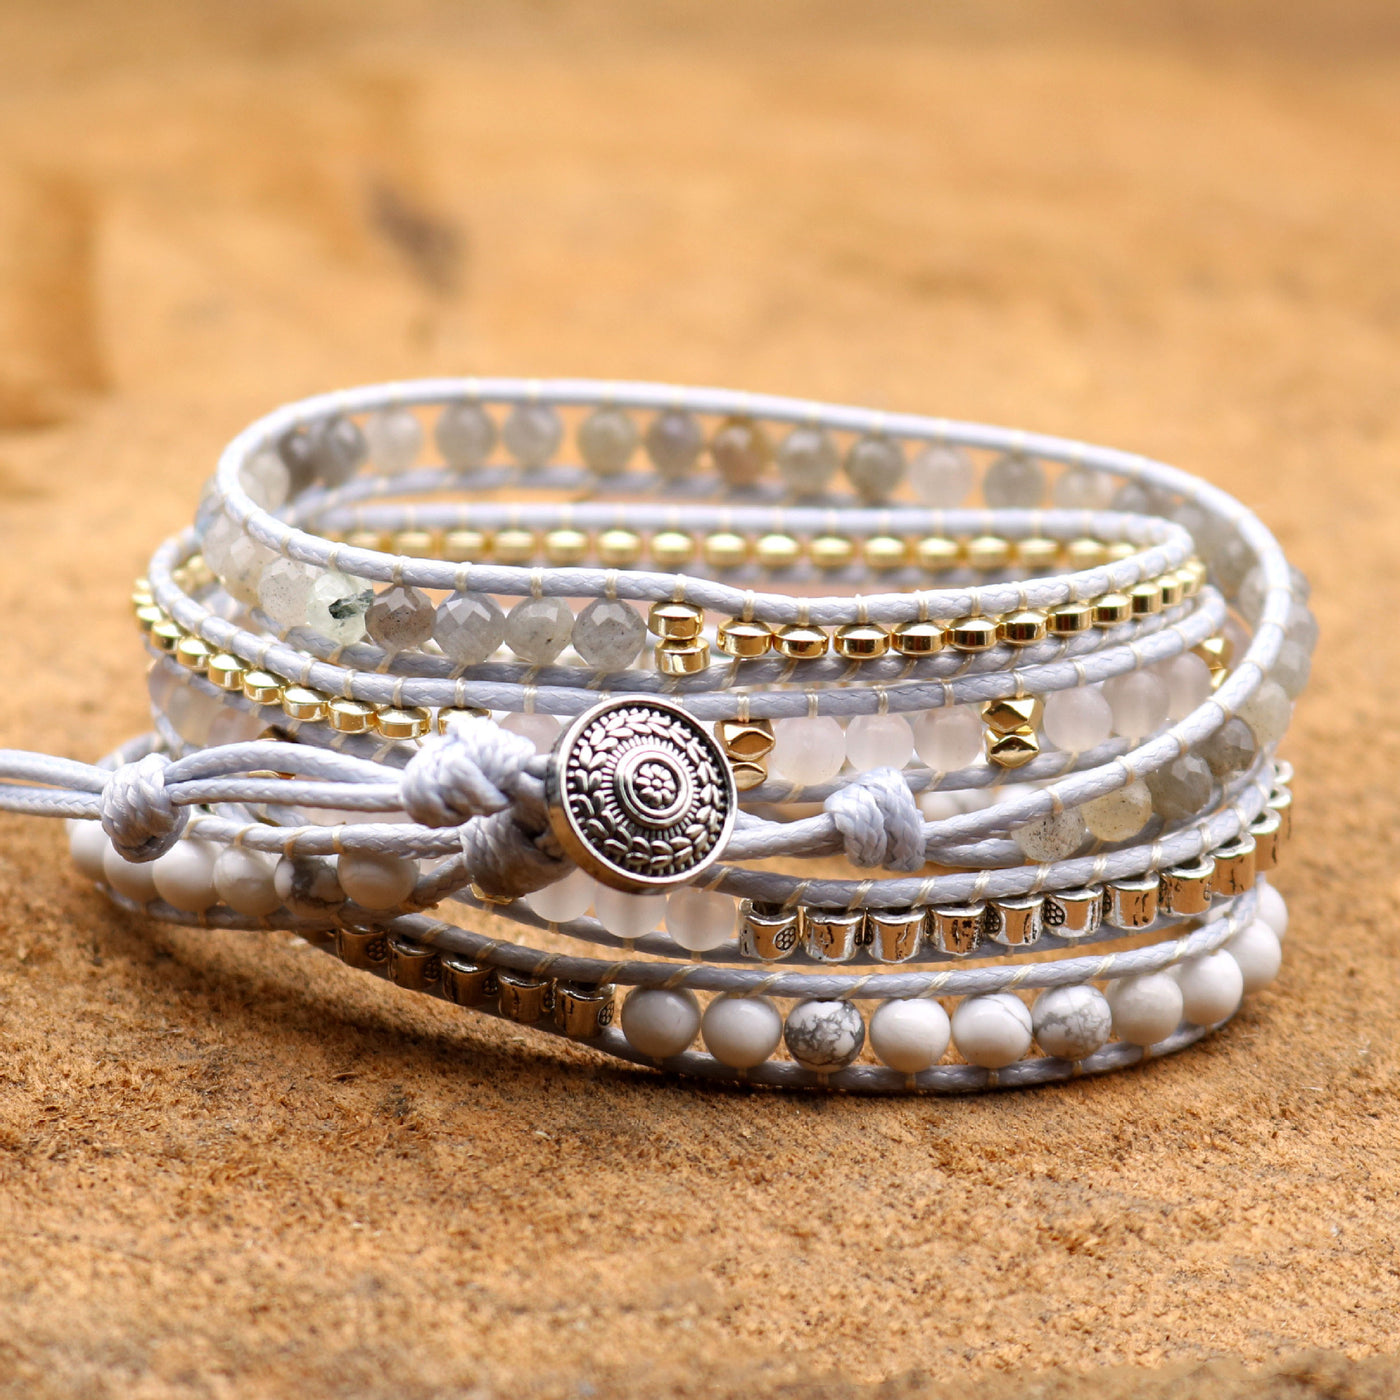 Hand-woven natural stone bracelet